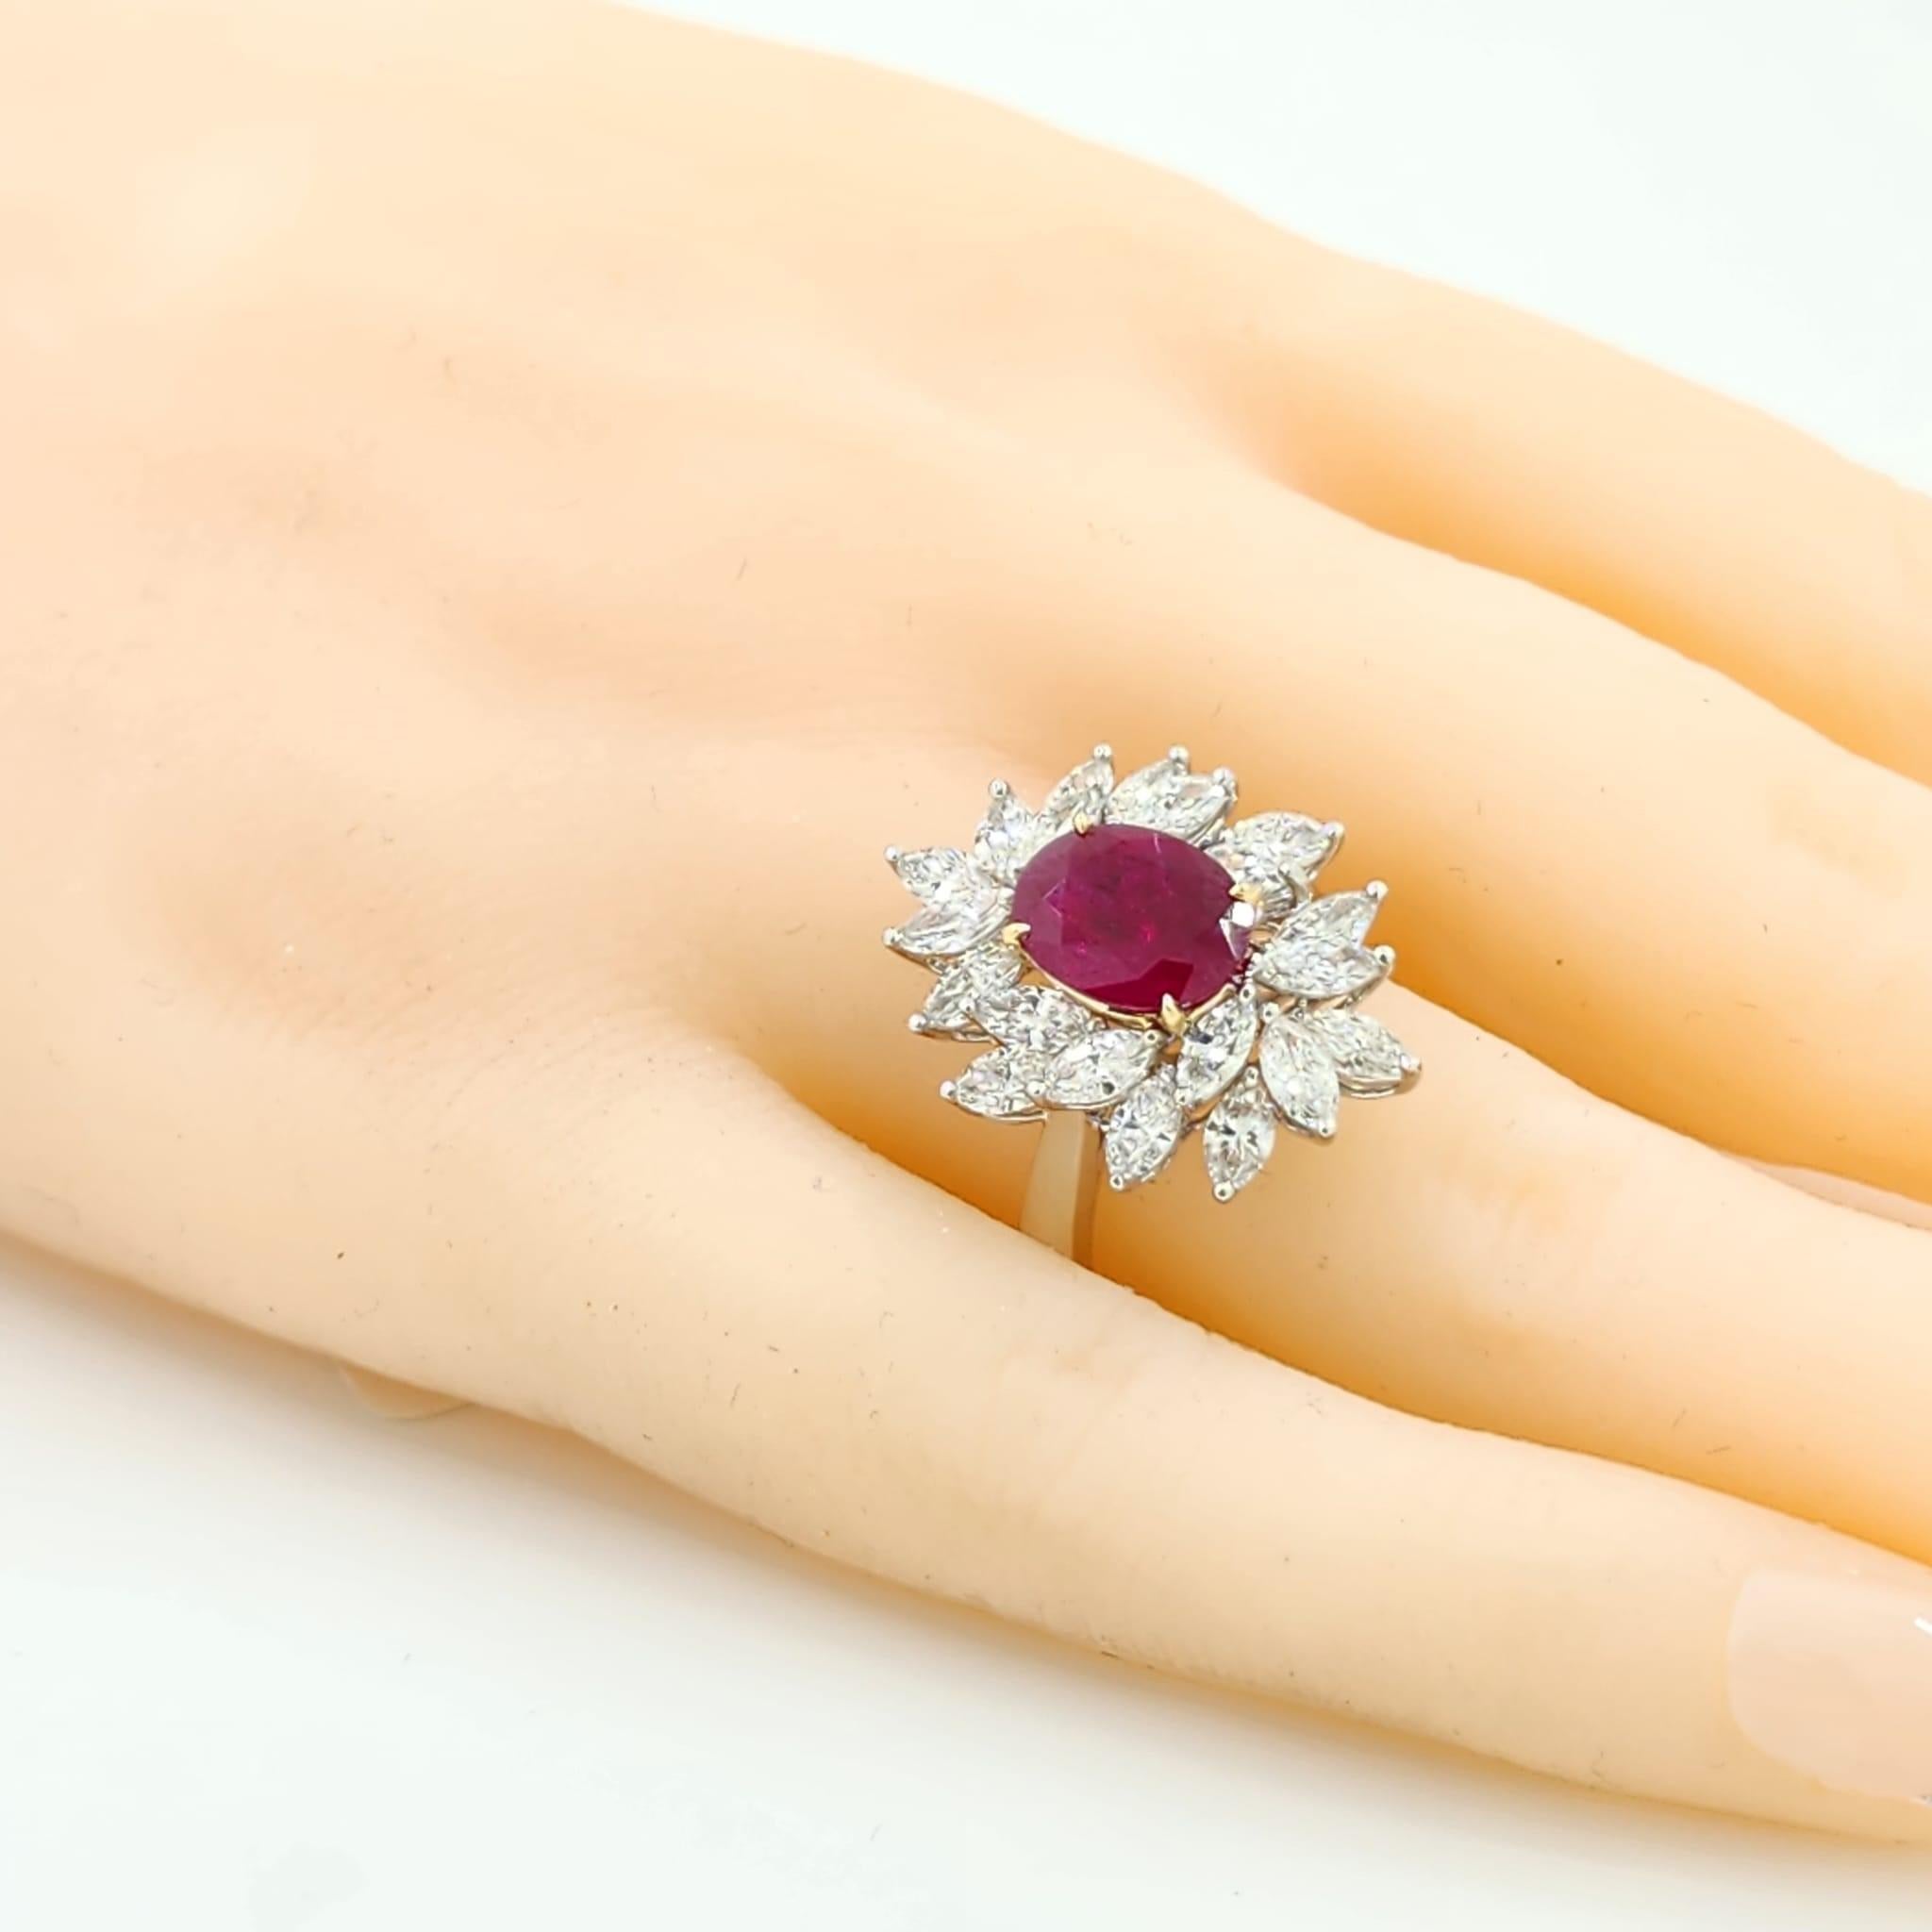 GIA Certified 2.11 Carat Burma Ruby Diamond Ring in 18 Karat White Gold For Sale 1